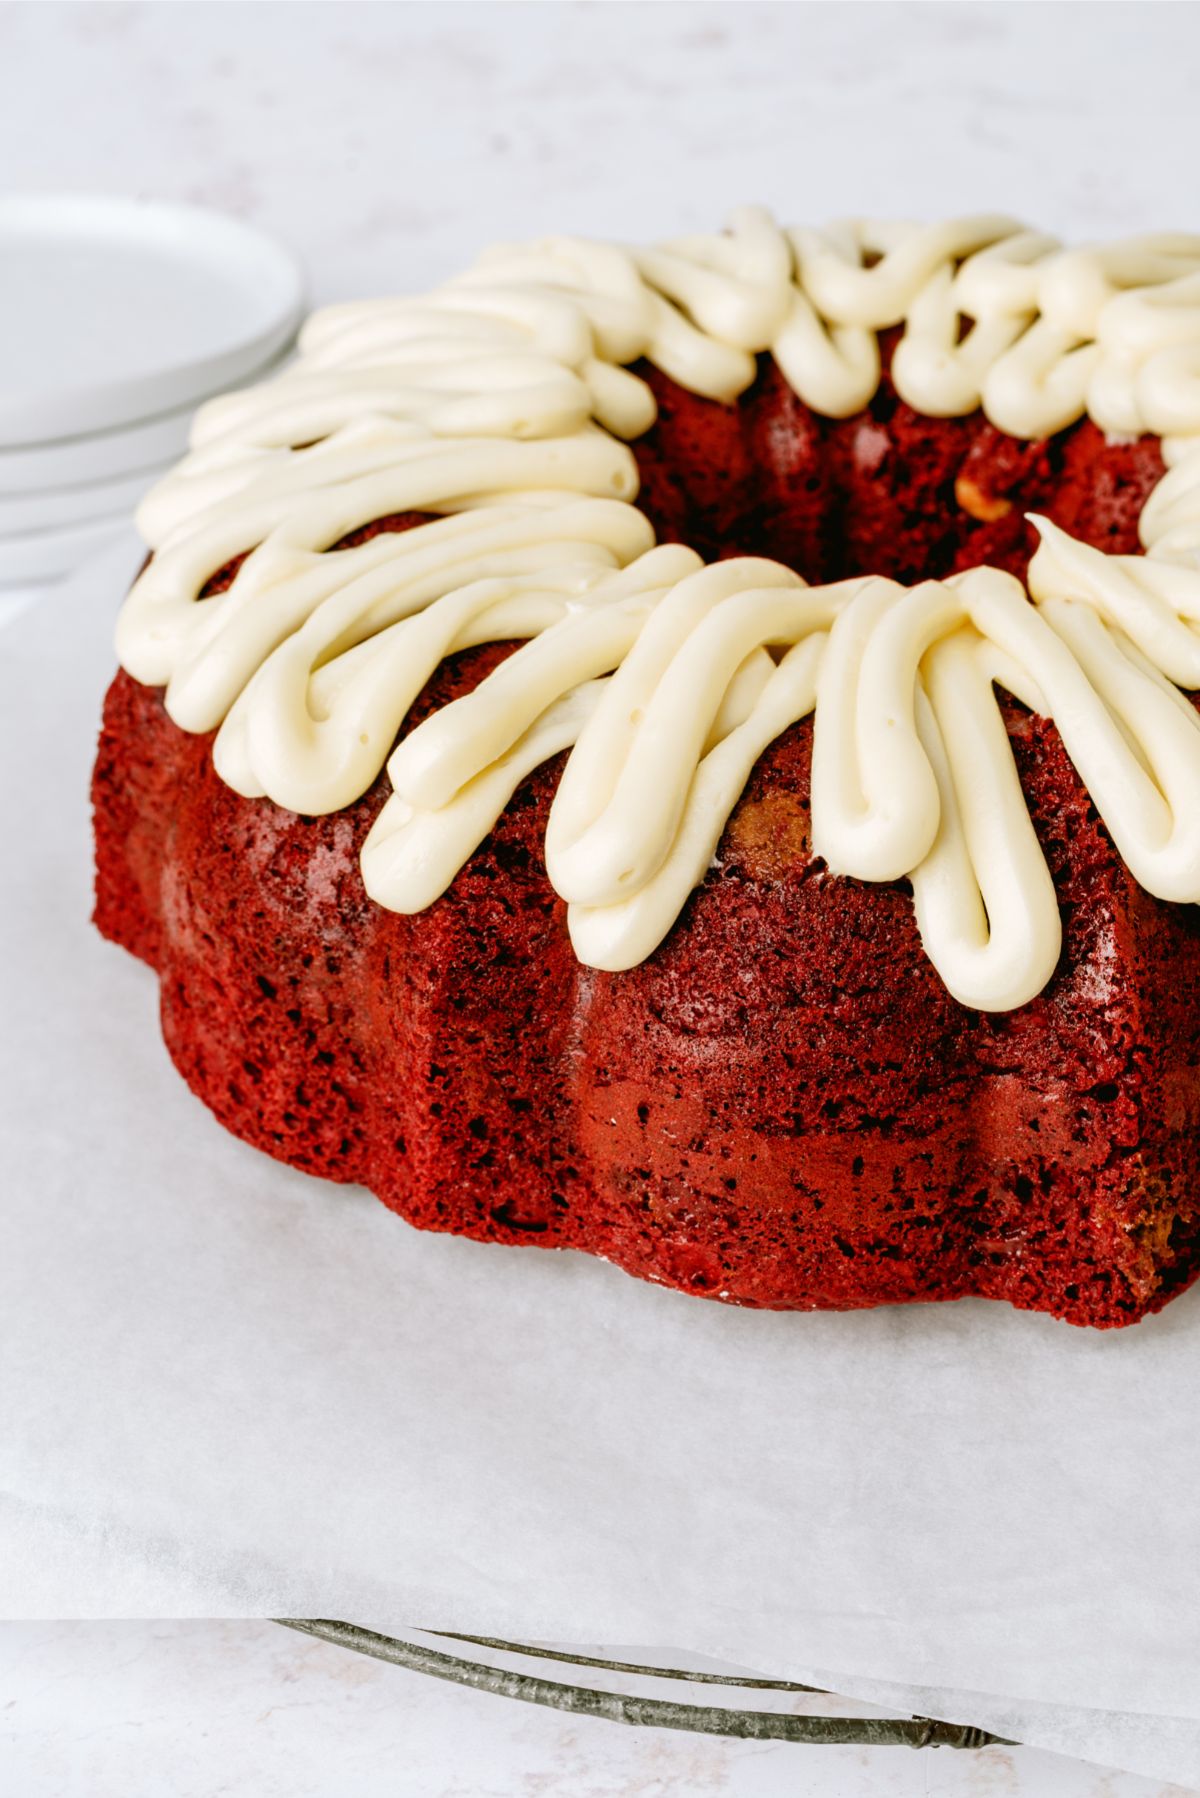 Red Velvet Bundt Cake with frosting